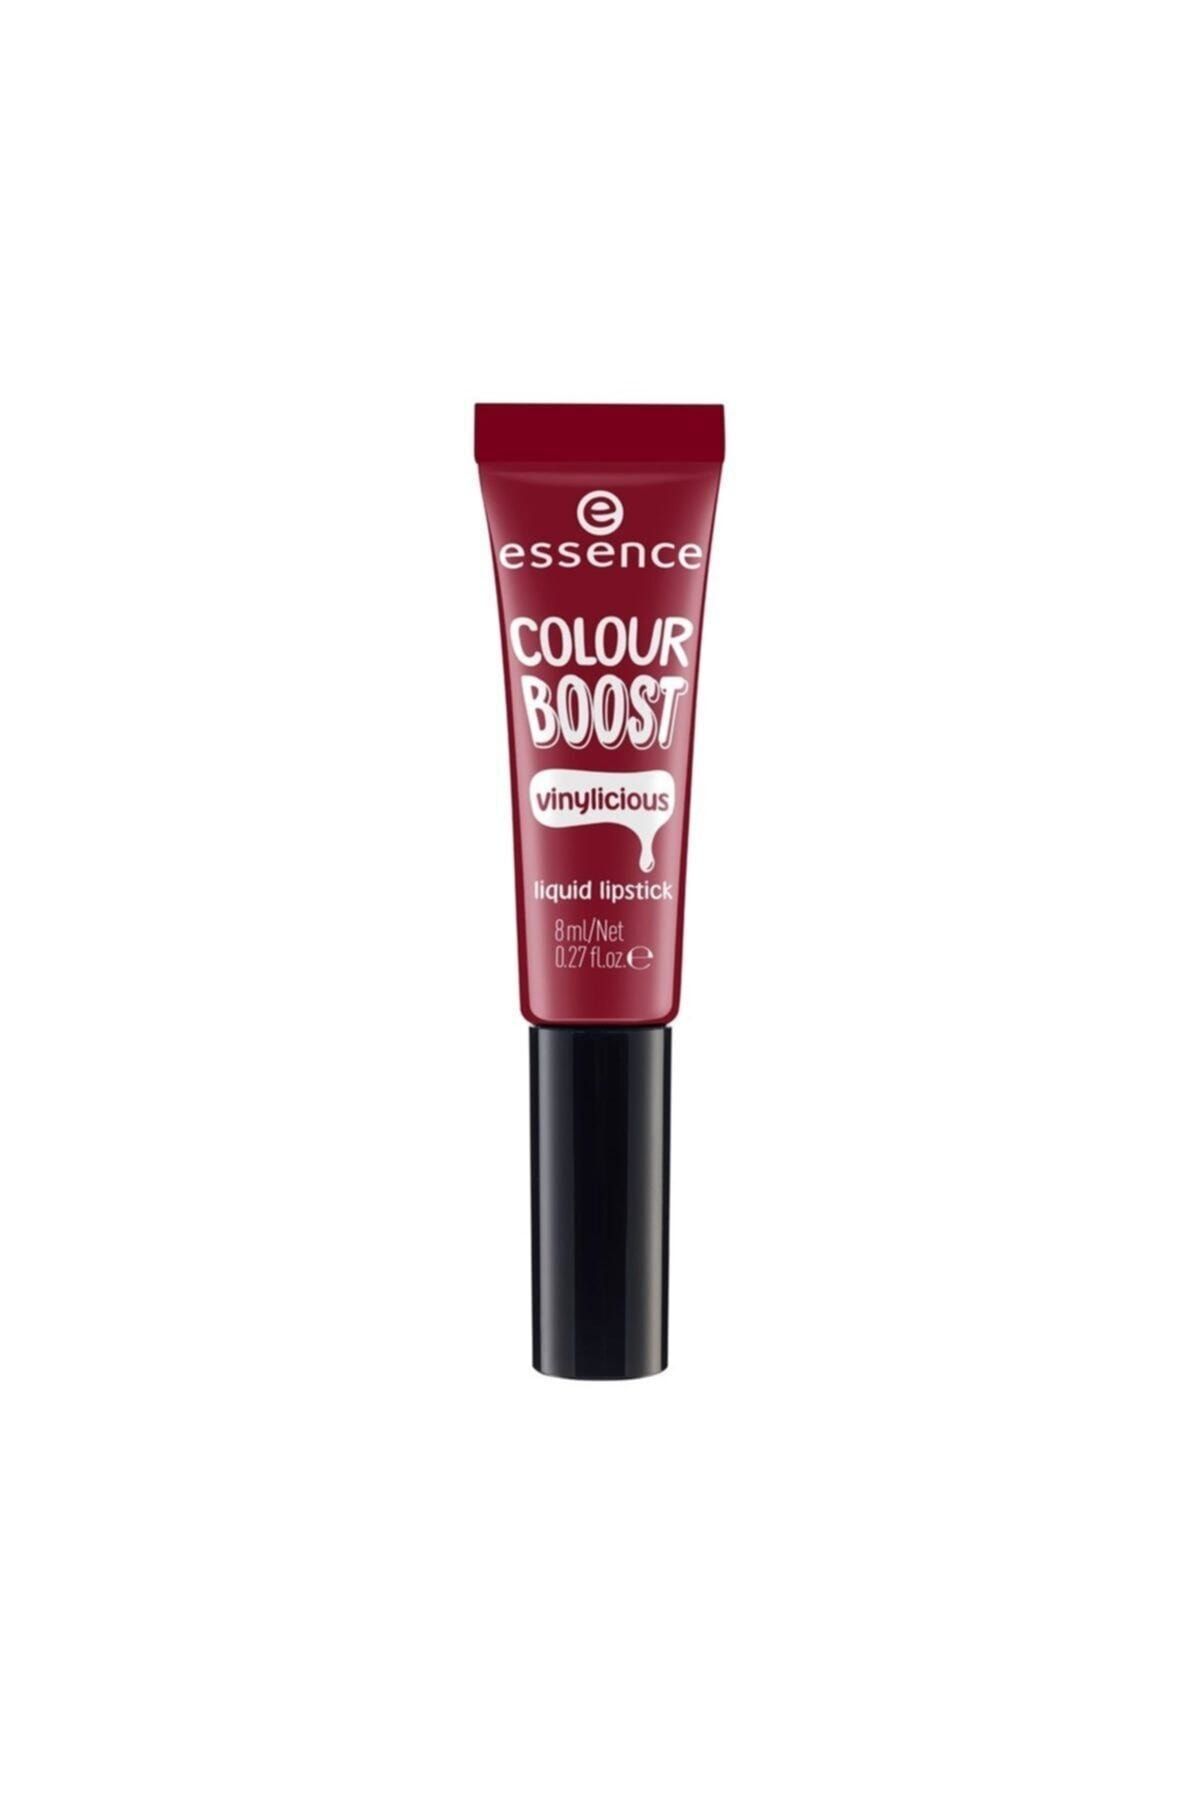 Essence Colour Boost Vinylicious Liquid Lipstick No 08